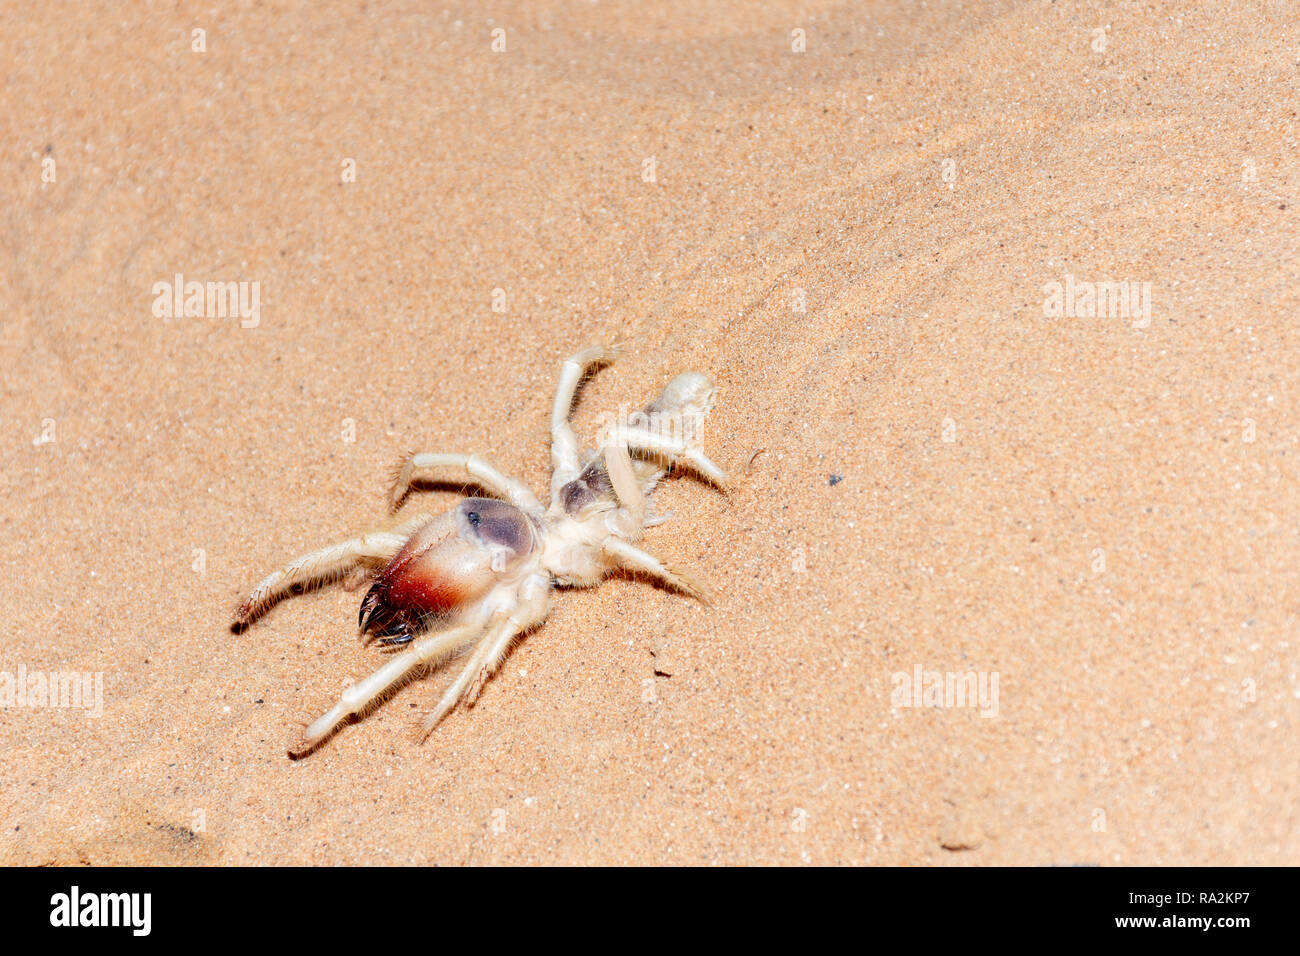 A camel spider patrols the sand in the Ras al Khaimah desert. Stock Photo